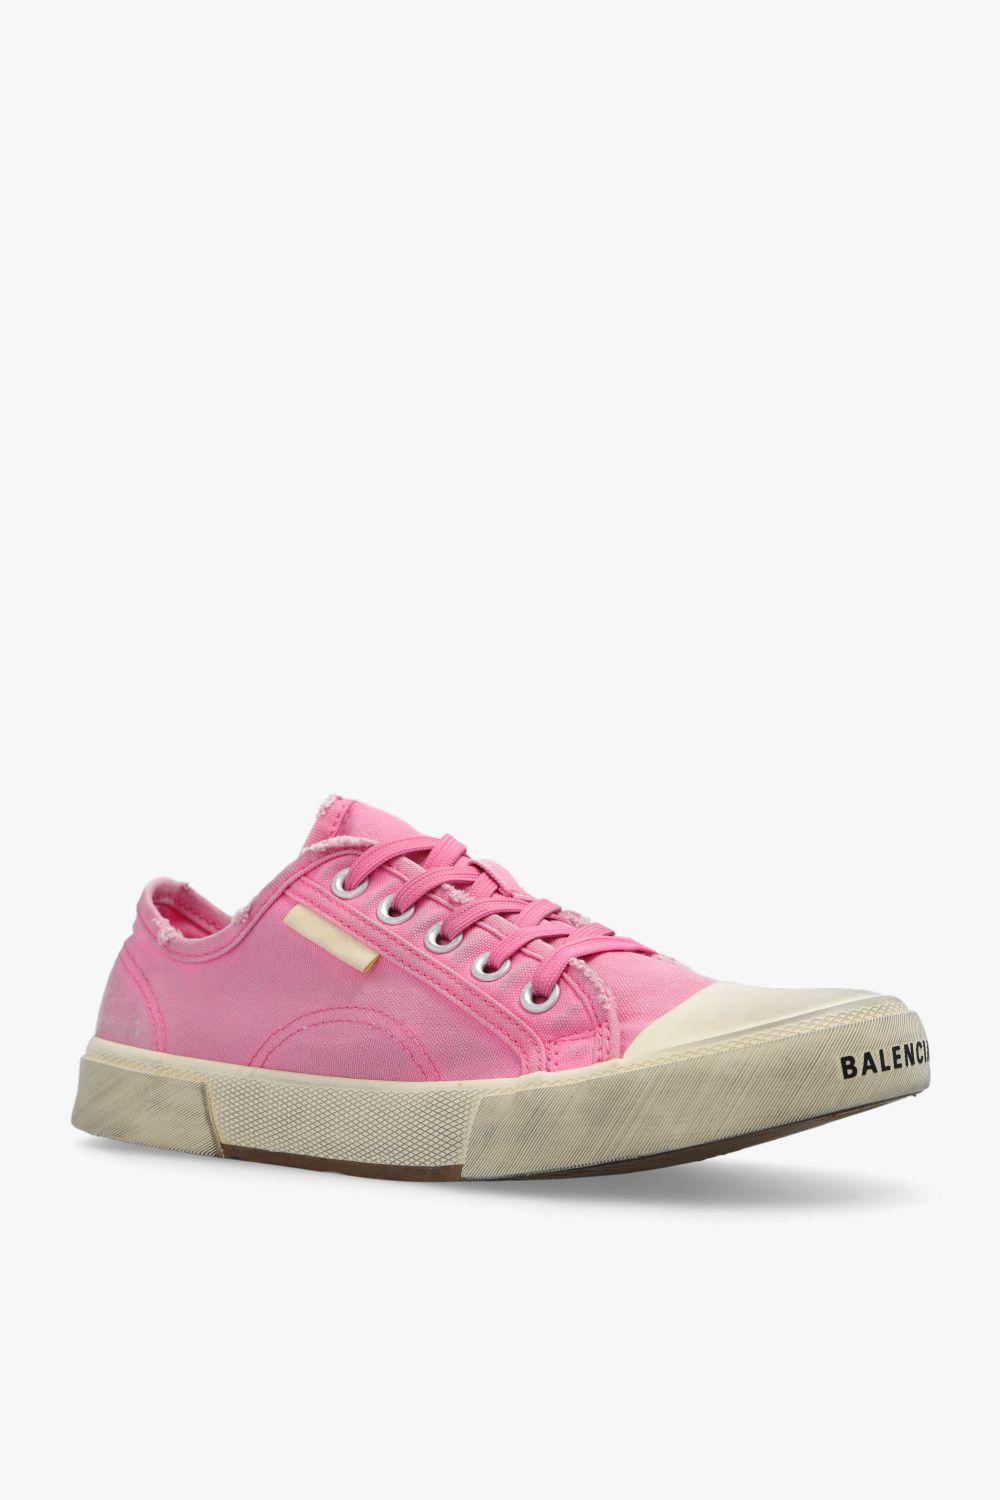 Chia sẻ hơn 72 về pink balenciaga low sneakers